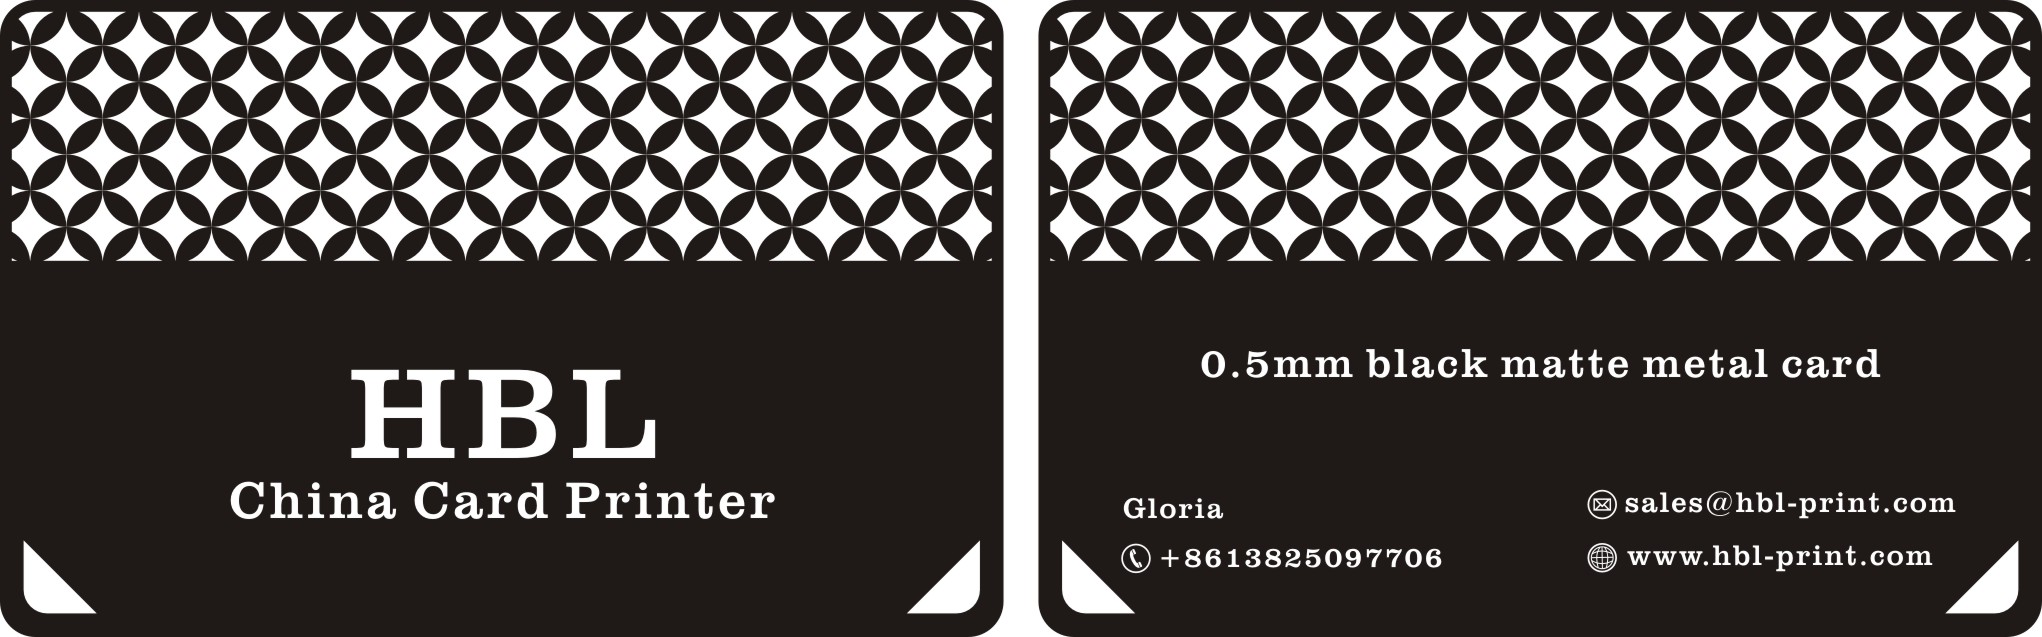 Black Matte Card Template (3)